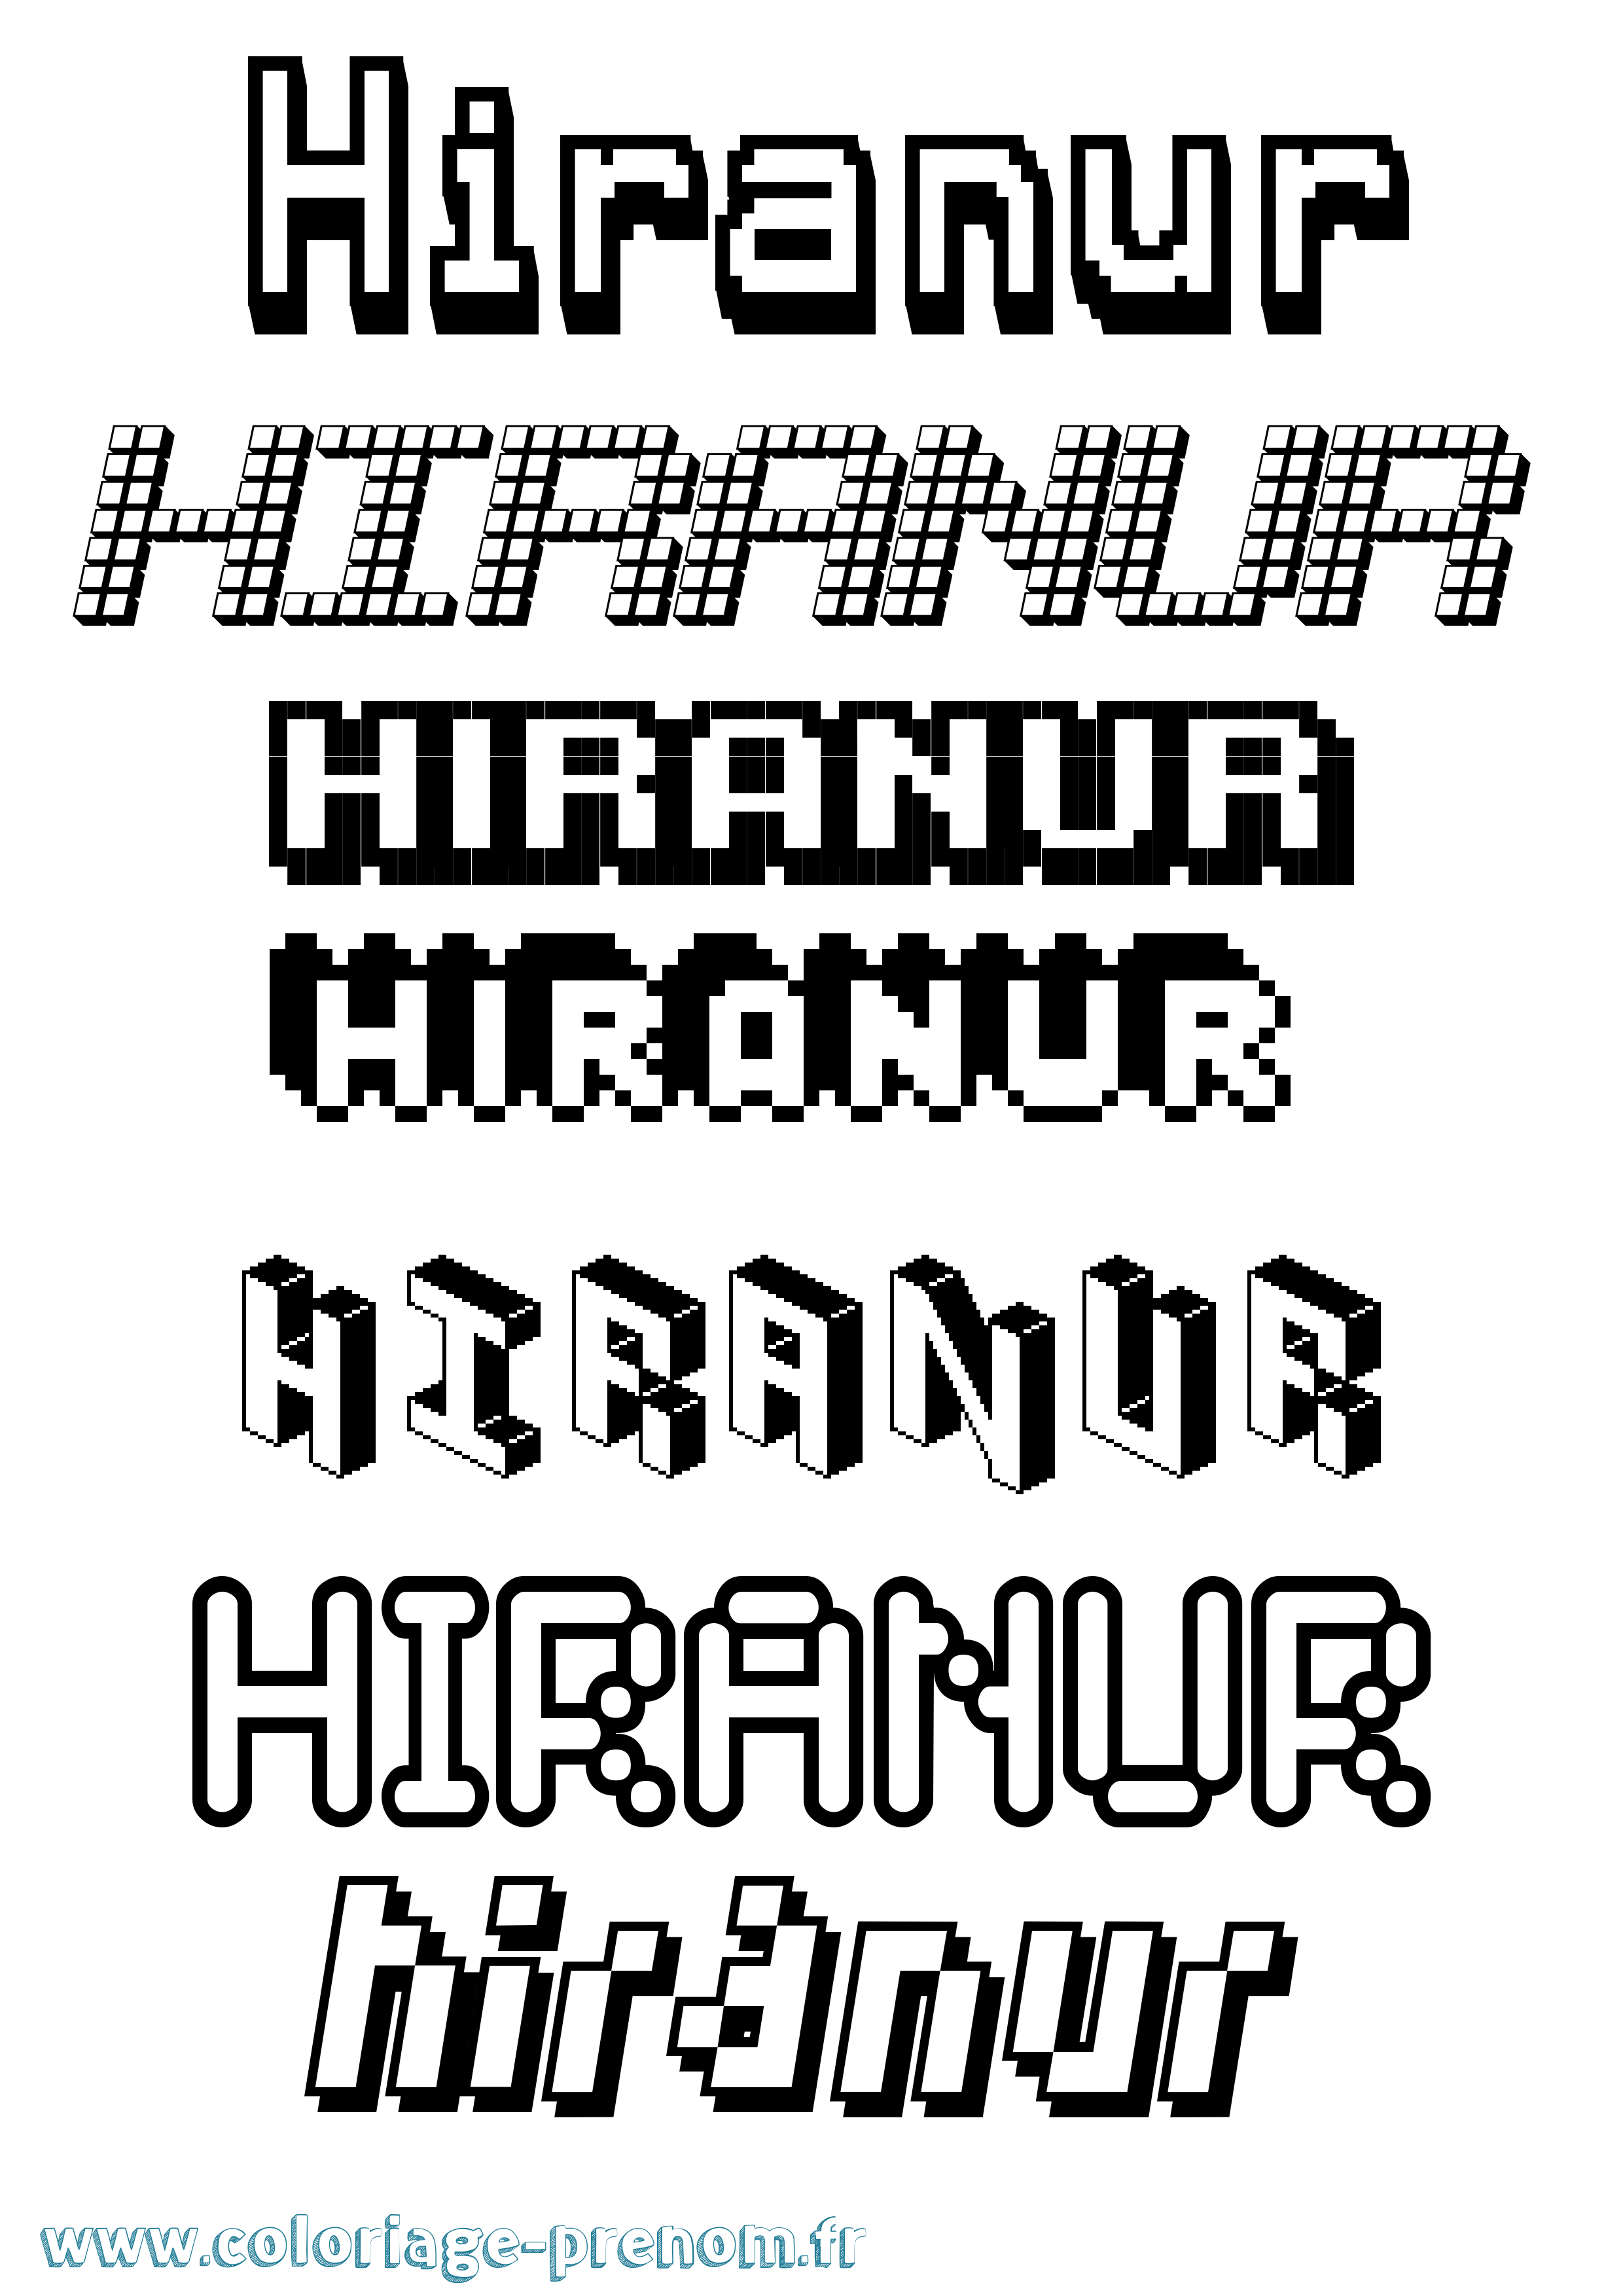 Coloriage prénom Hiranur Pixel